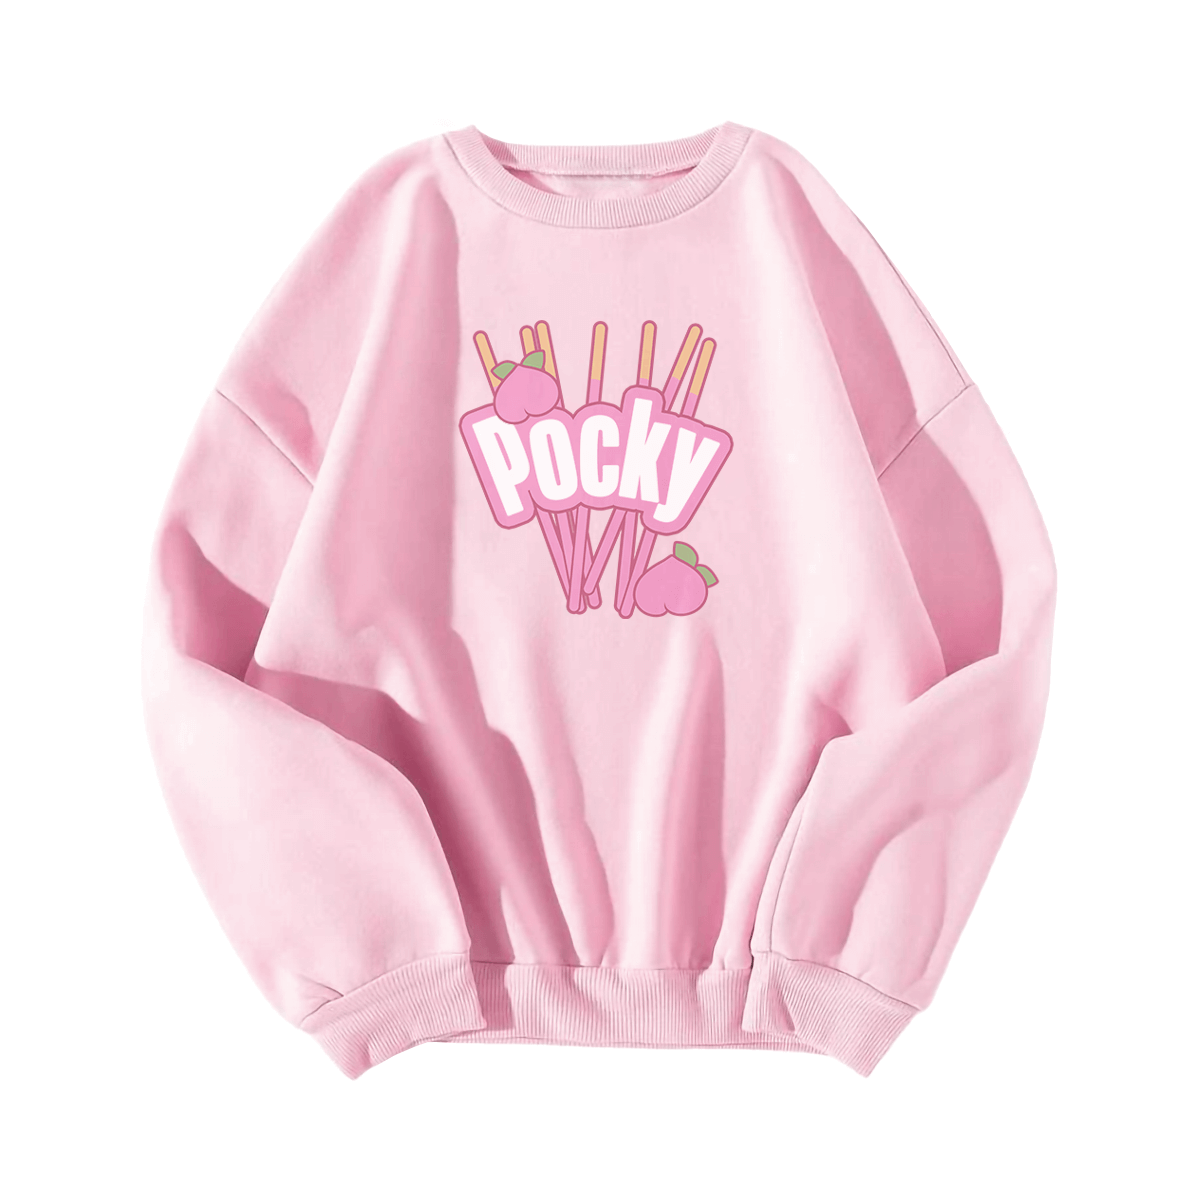 Pocky Kawaii Sweatshirt Pink Aesthetic Clothes for Women & Girls